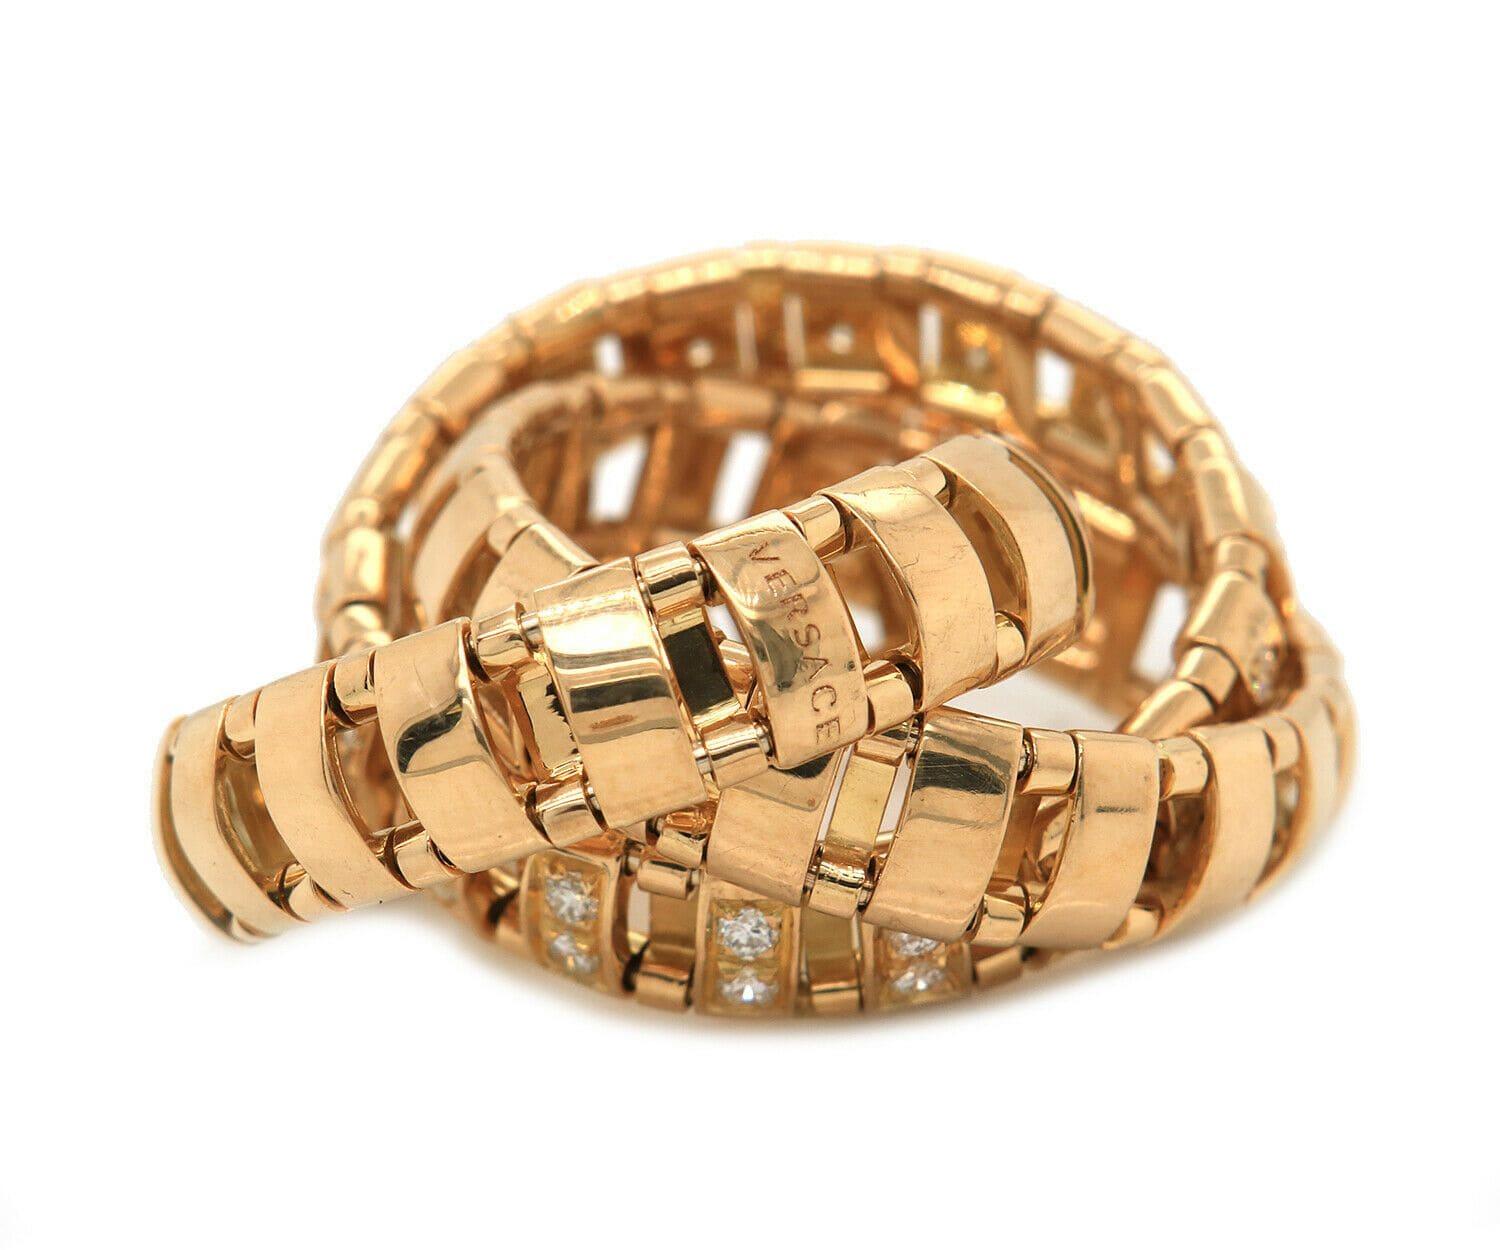 versace gold ring 18k